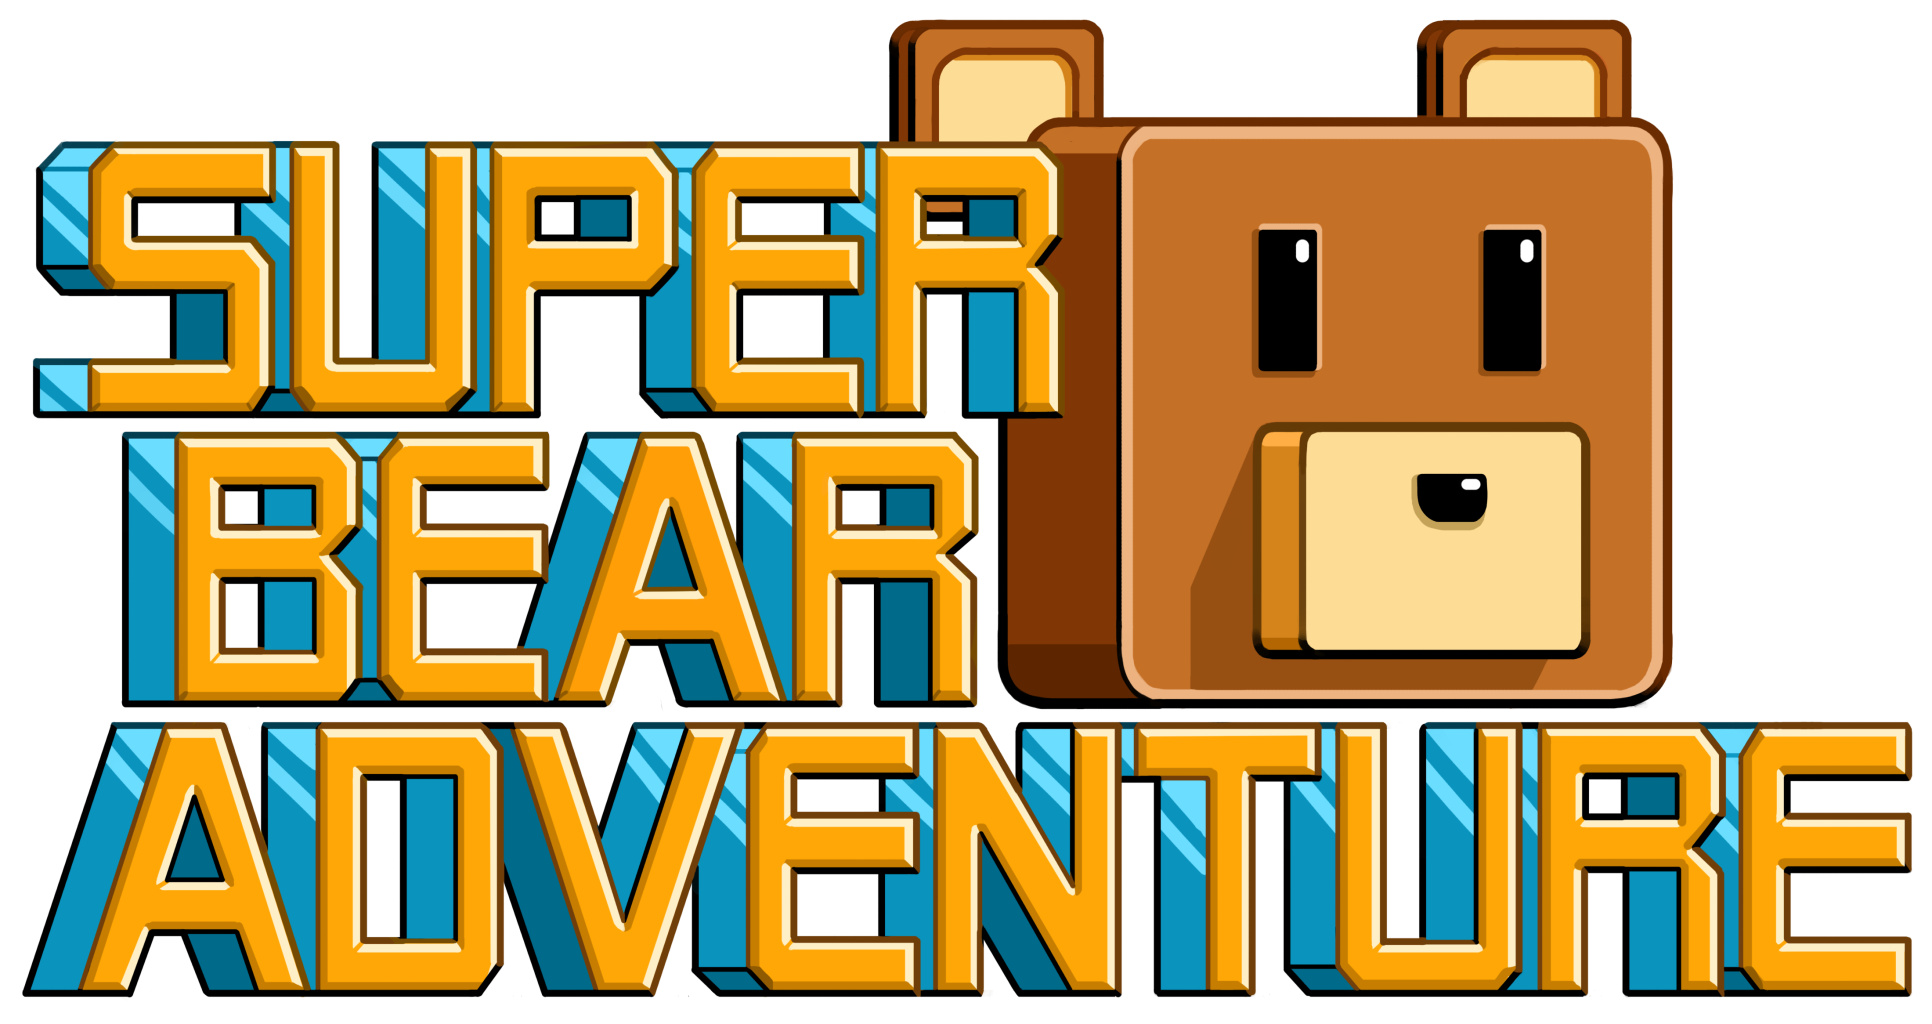 Super bear adventure игрушки. Супер Беар адвенчер. Игра супер Беар. Супер медведь игра. Супер Беар адвентуре игра.